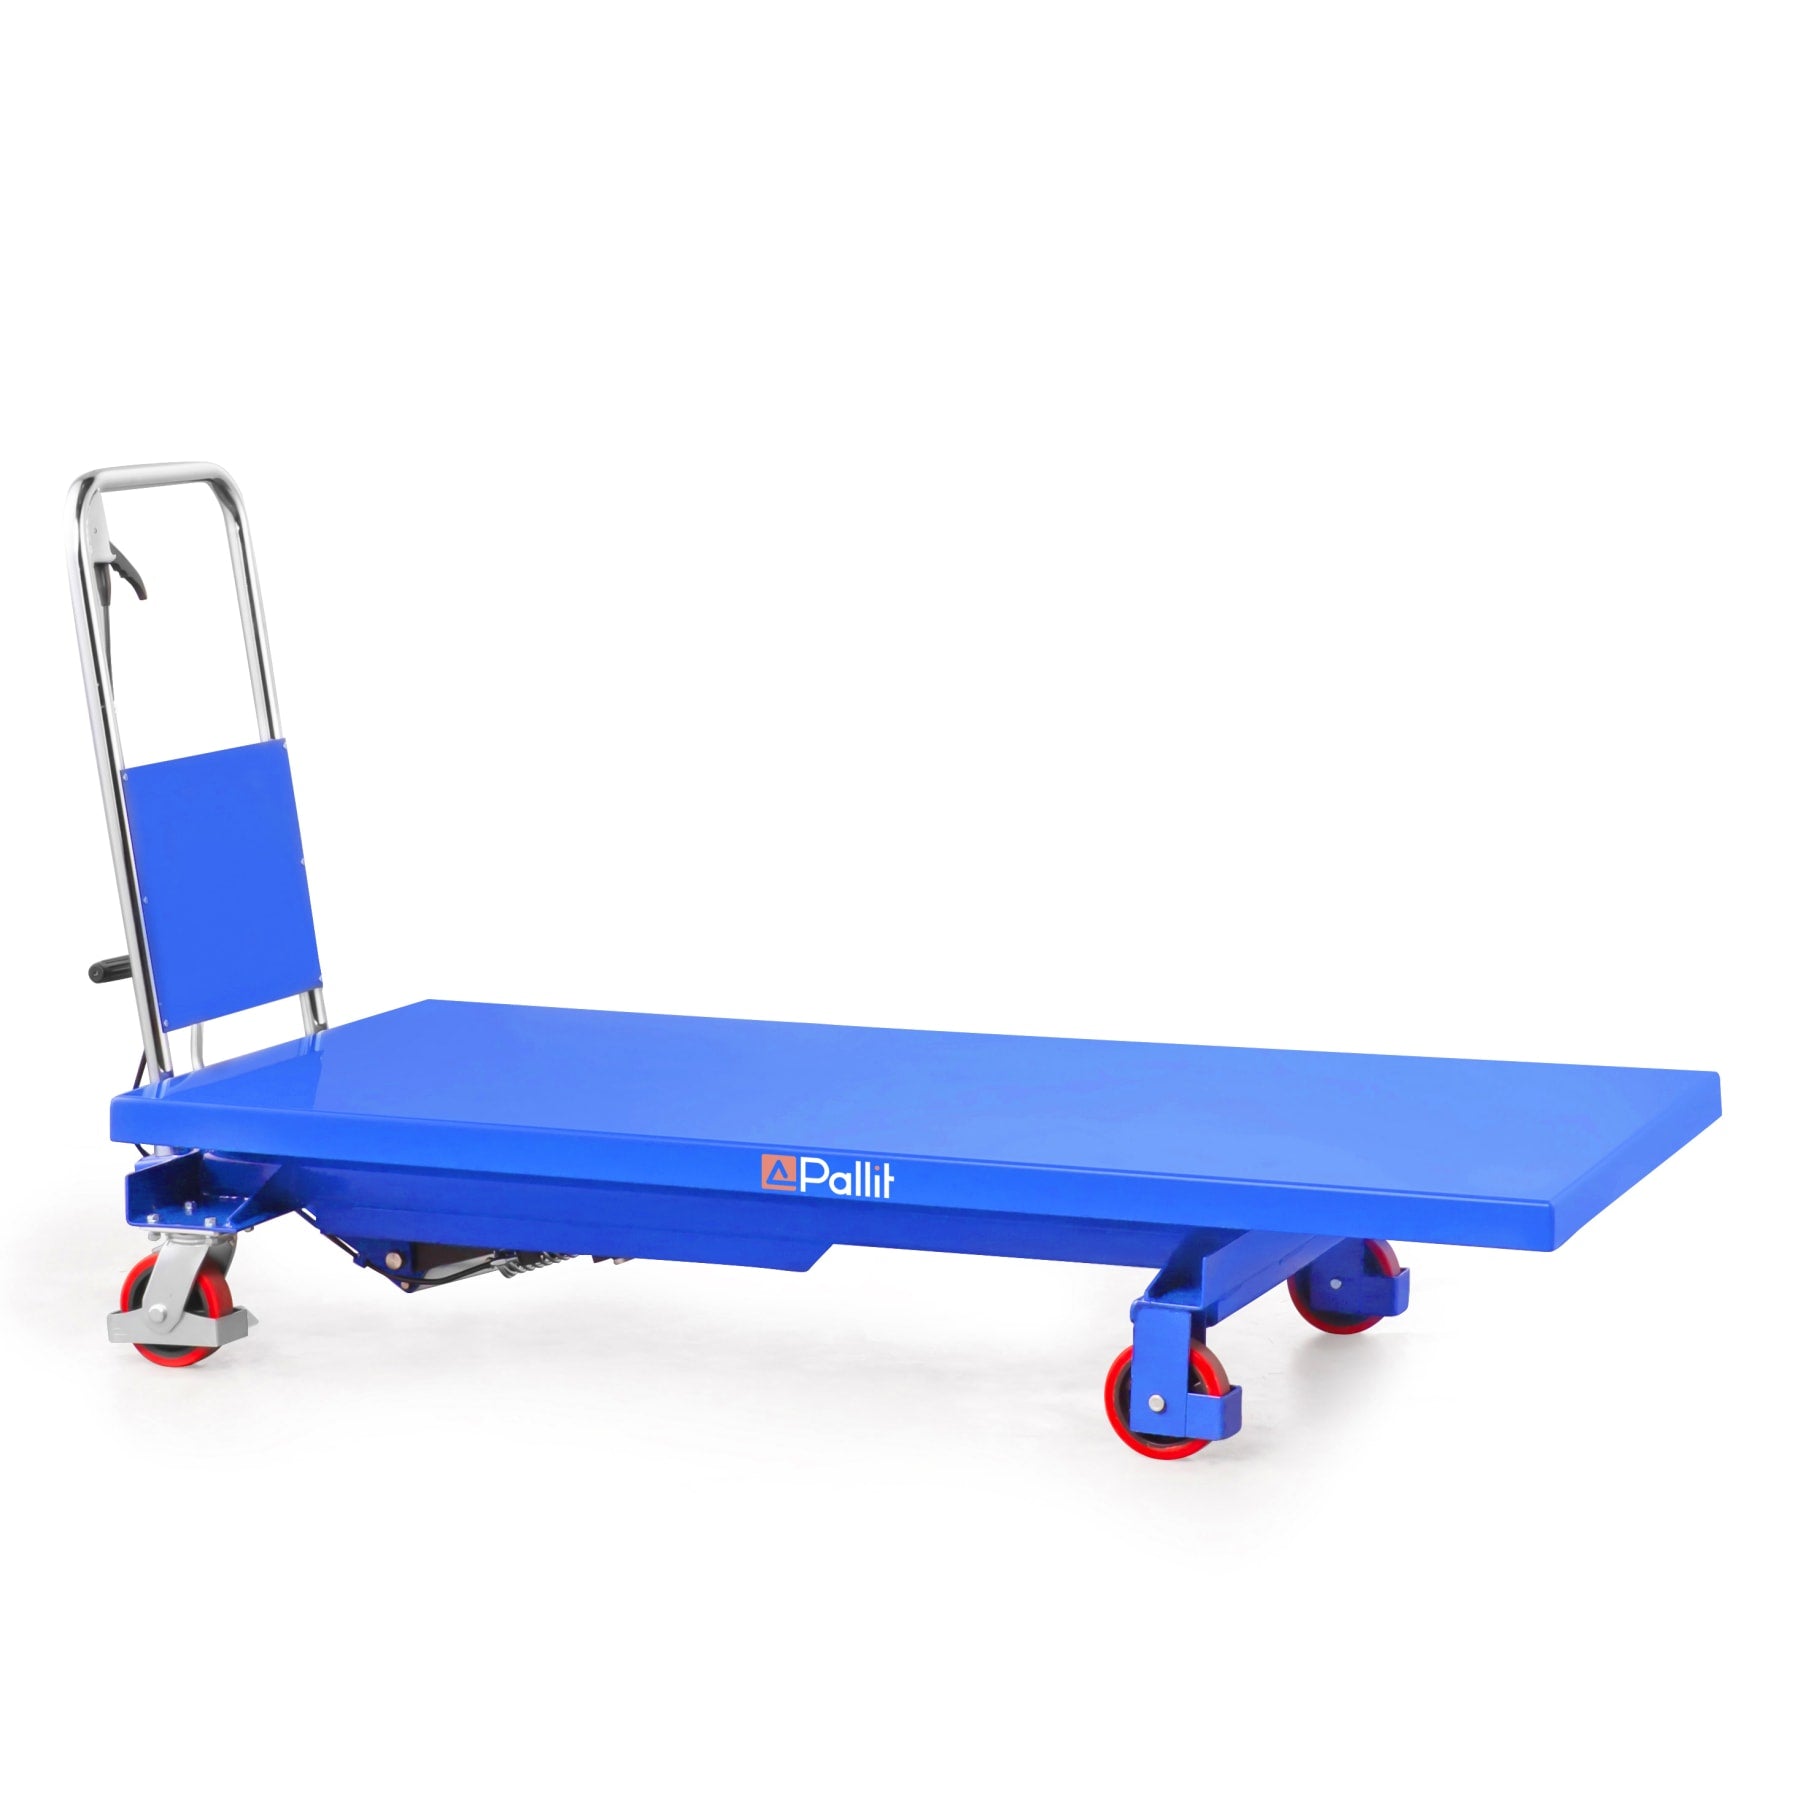 Mobile Scissor Lift Table XLARGE with Large Platform